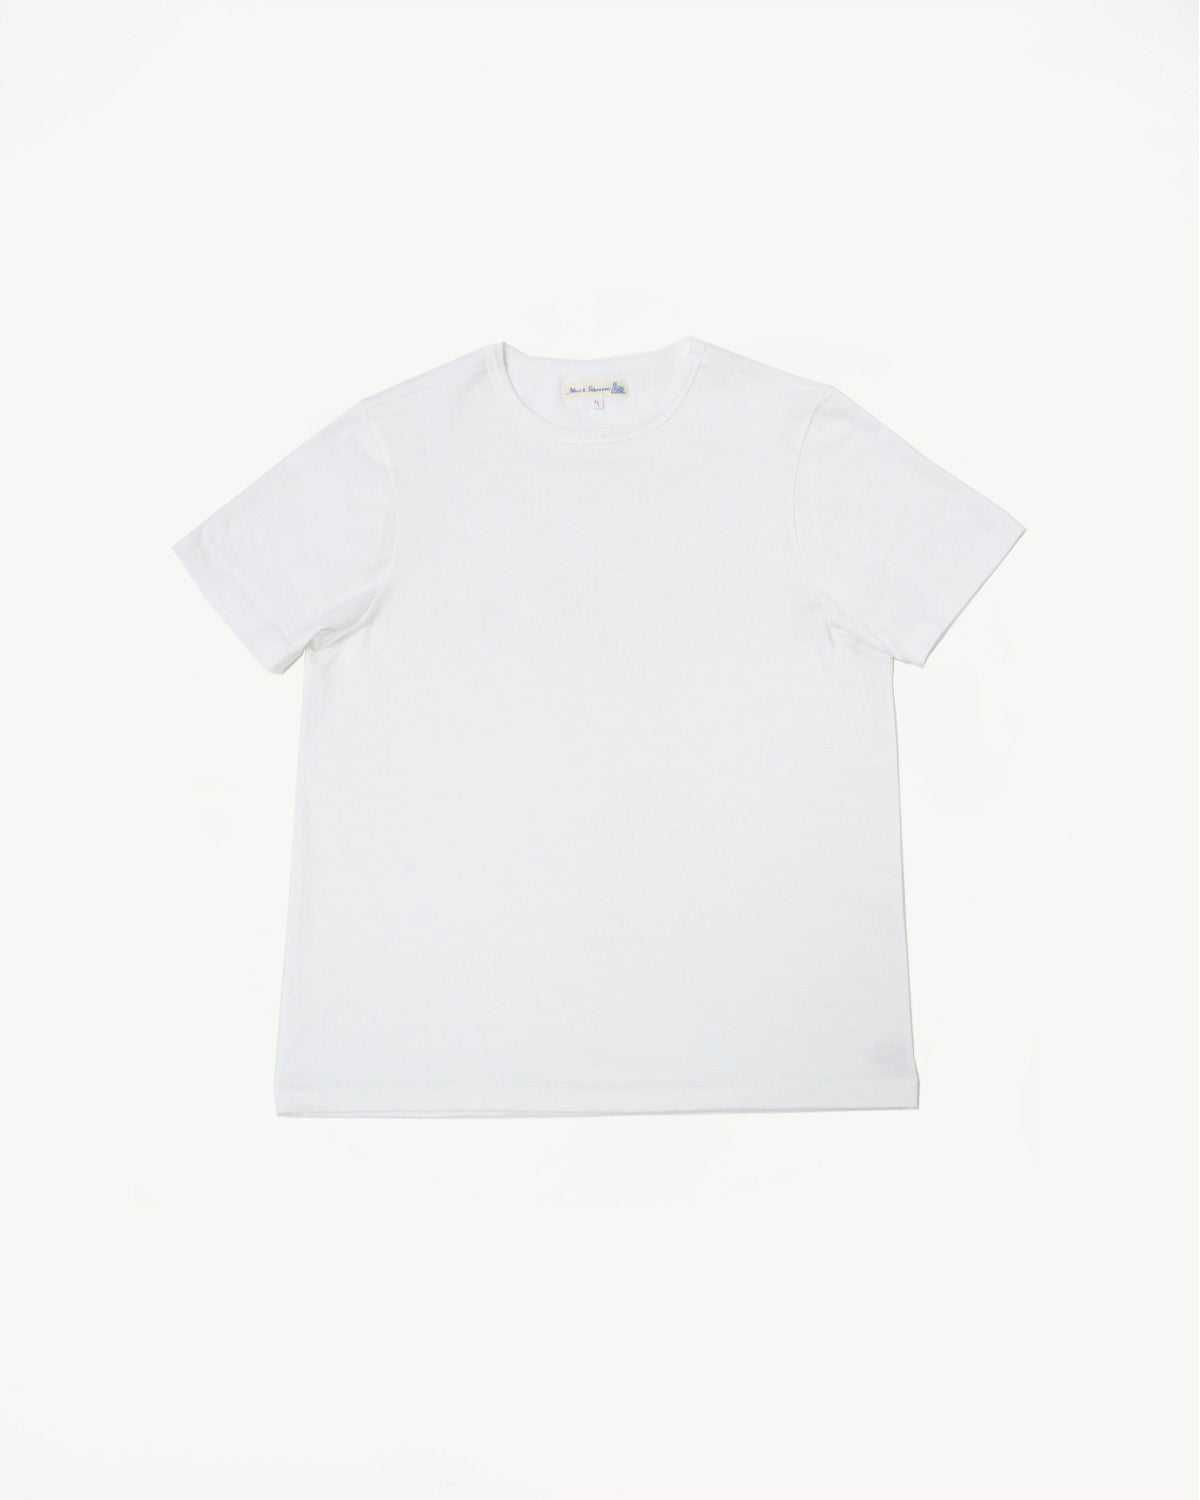 215.01 - 8.6oz Loopwheeled T-Shirt Classic Fit - White